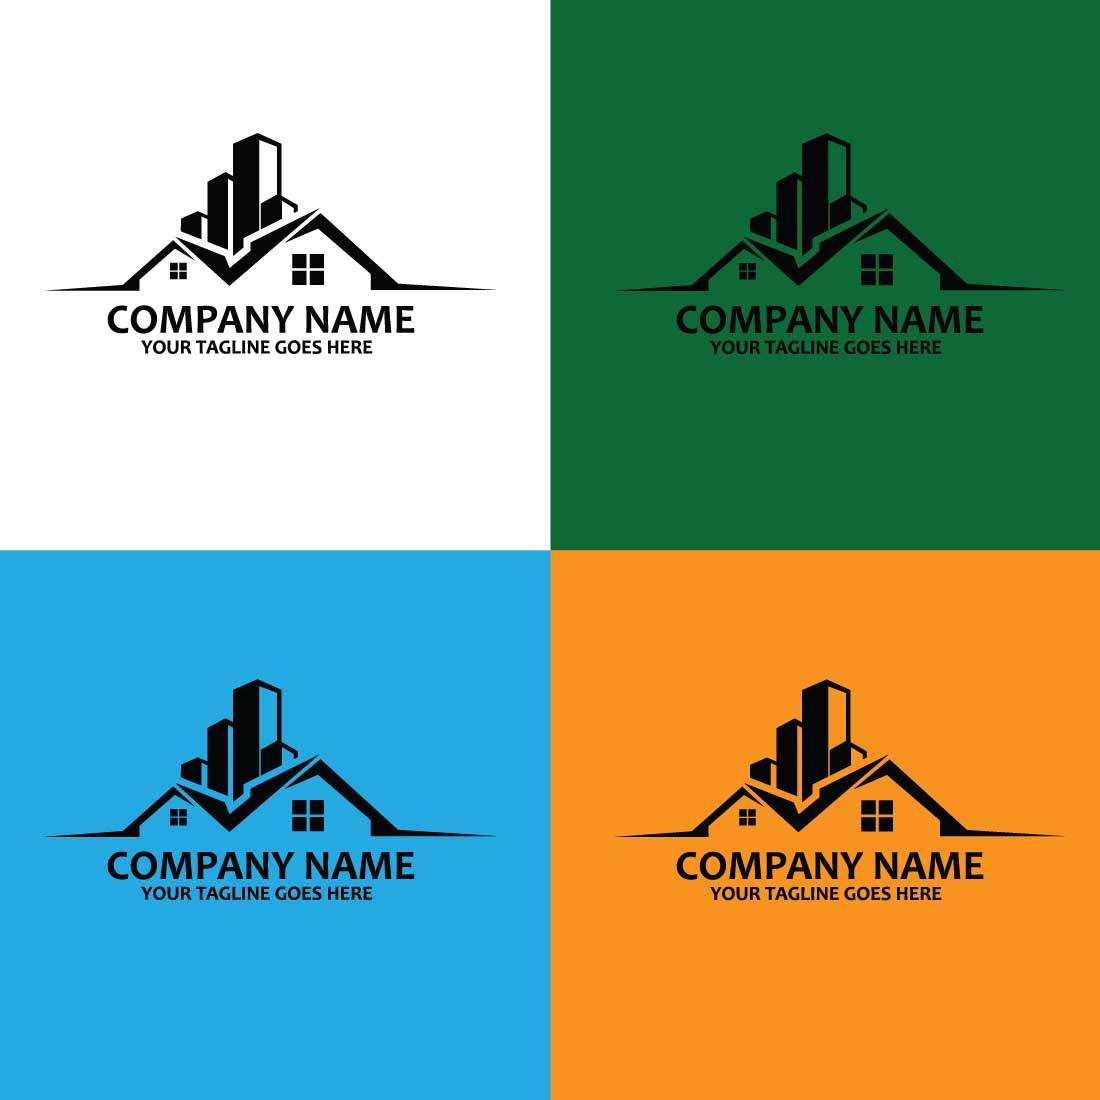 Real estate logo design preview image.